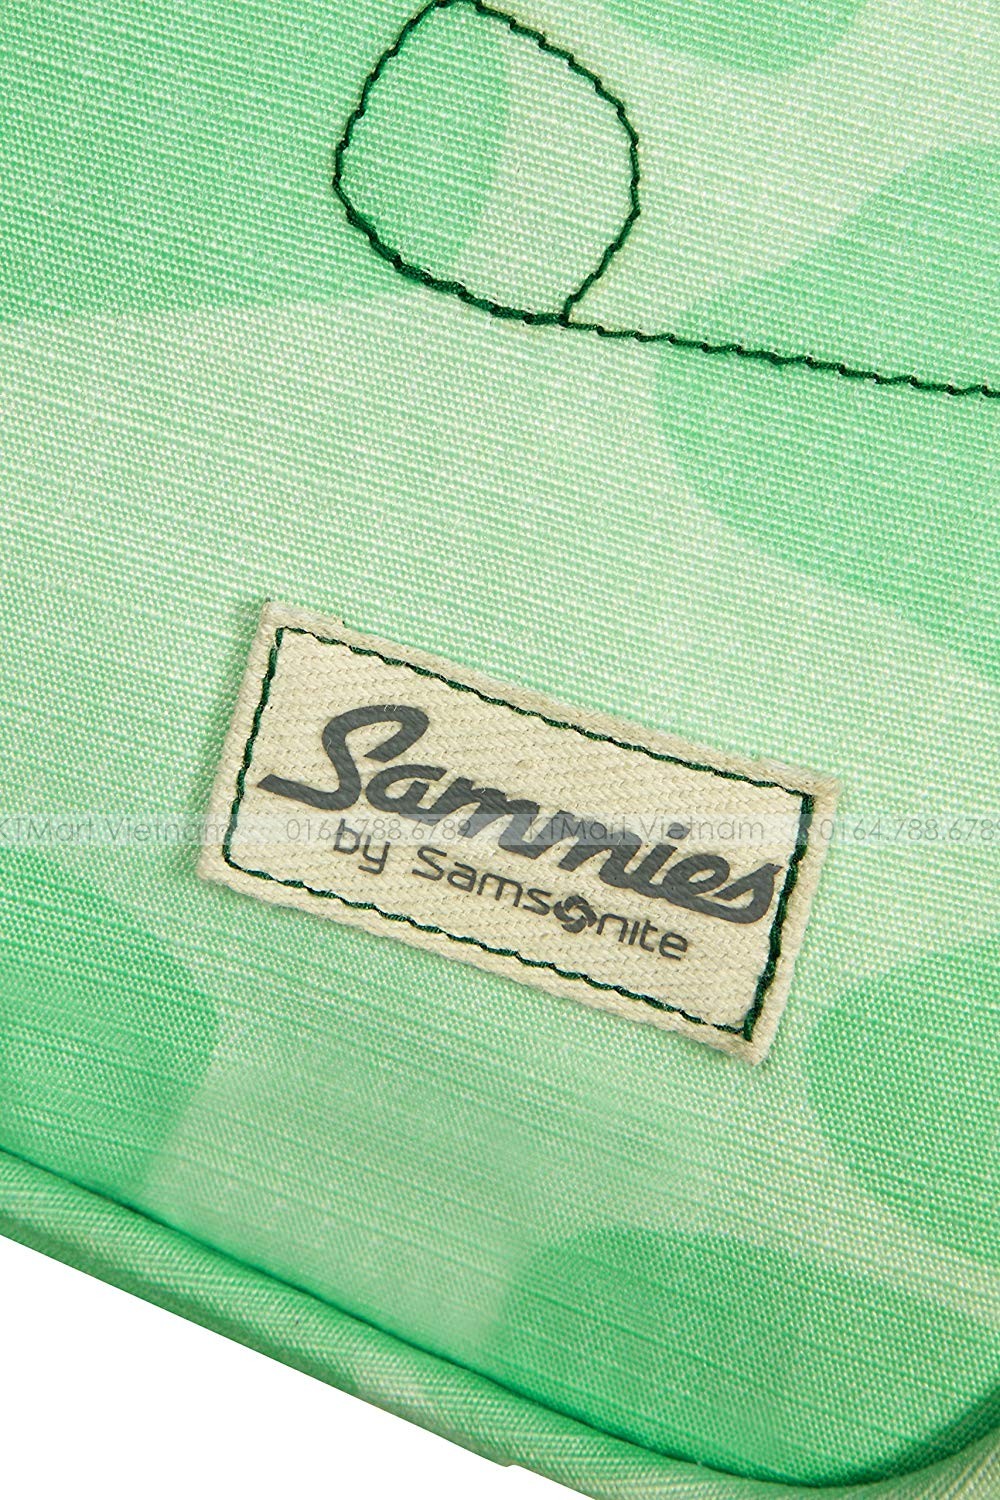 SAMSONITE Happy Sammies Upright 45-1.7 kg, 45 cm, 24 L, Dino Samsonite ktmart.vn 5